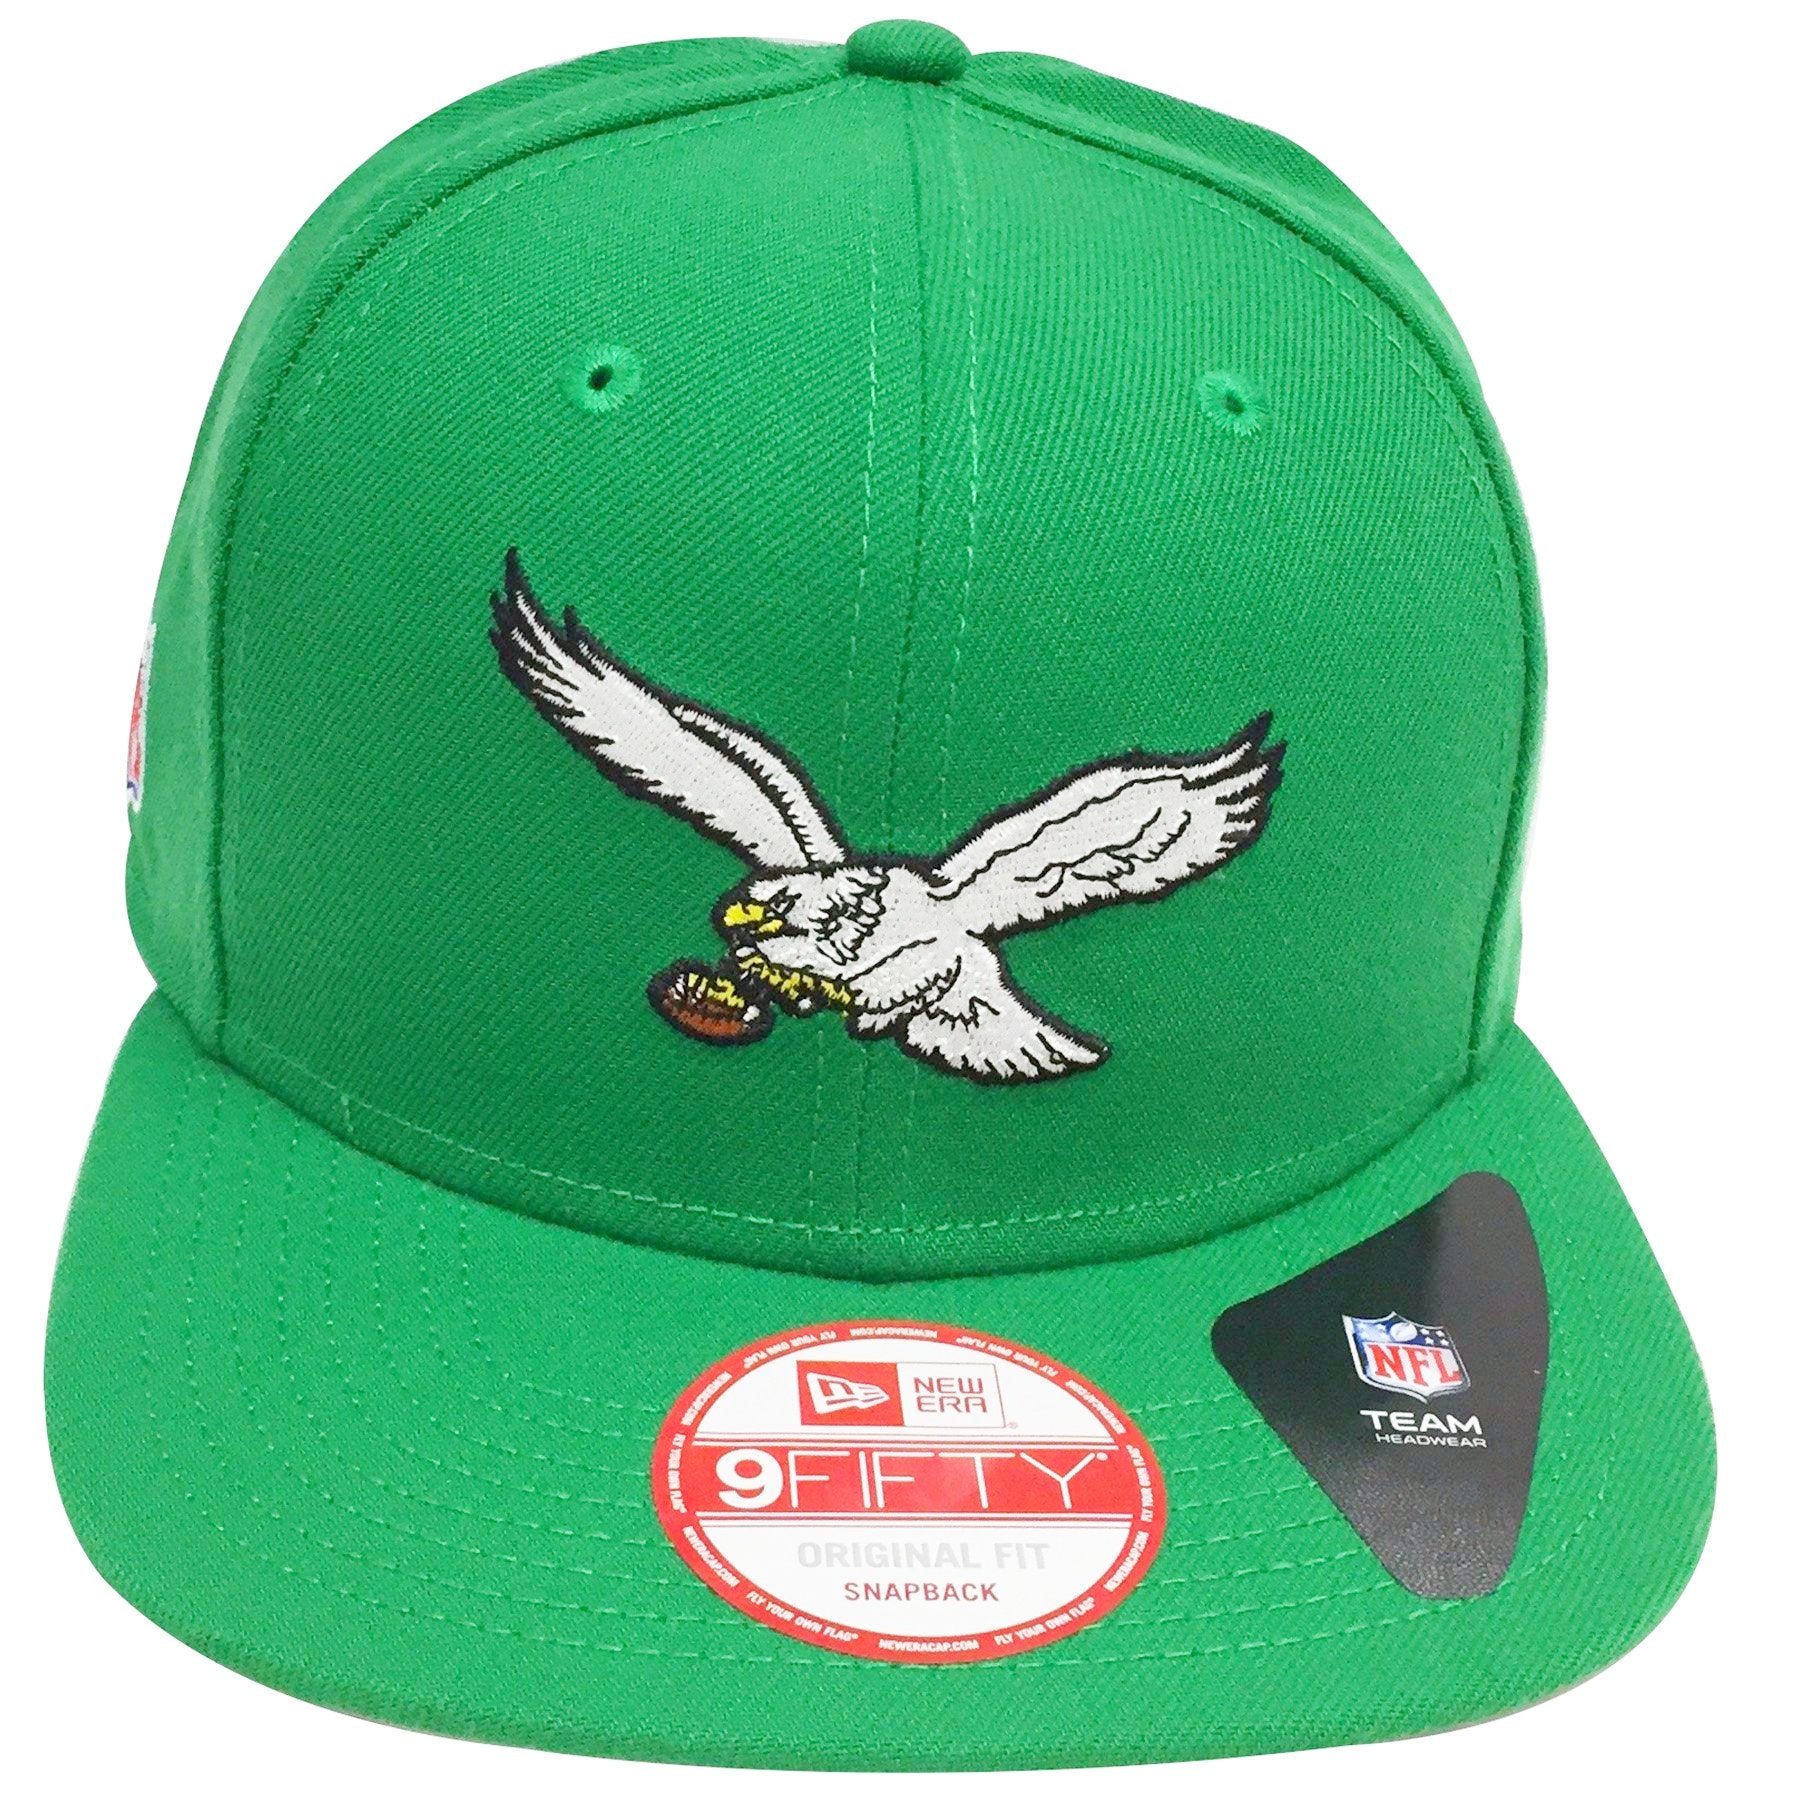 eagles snapback hat